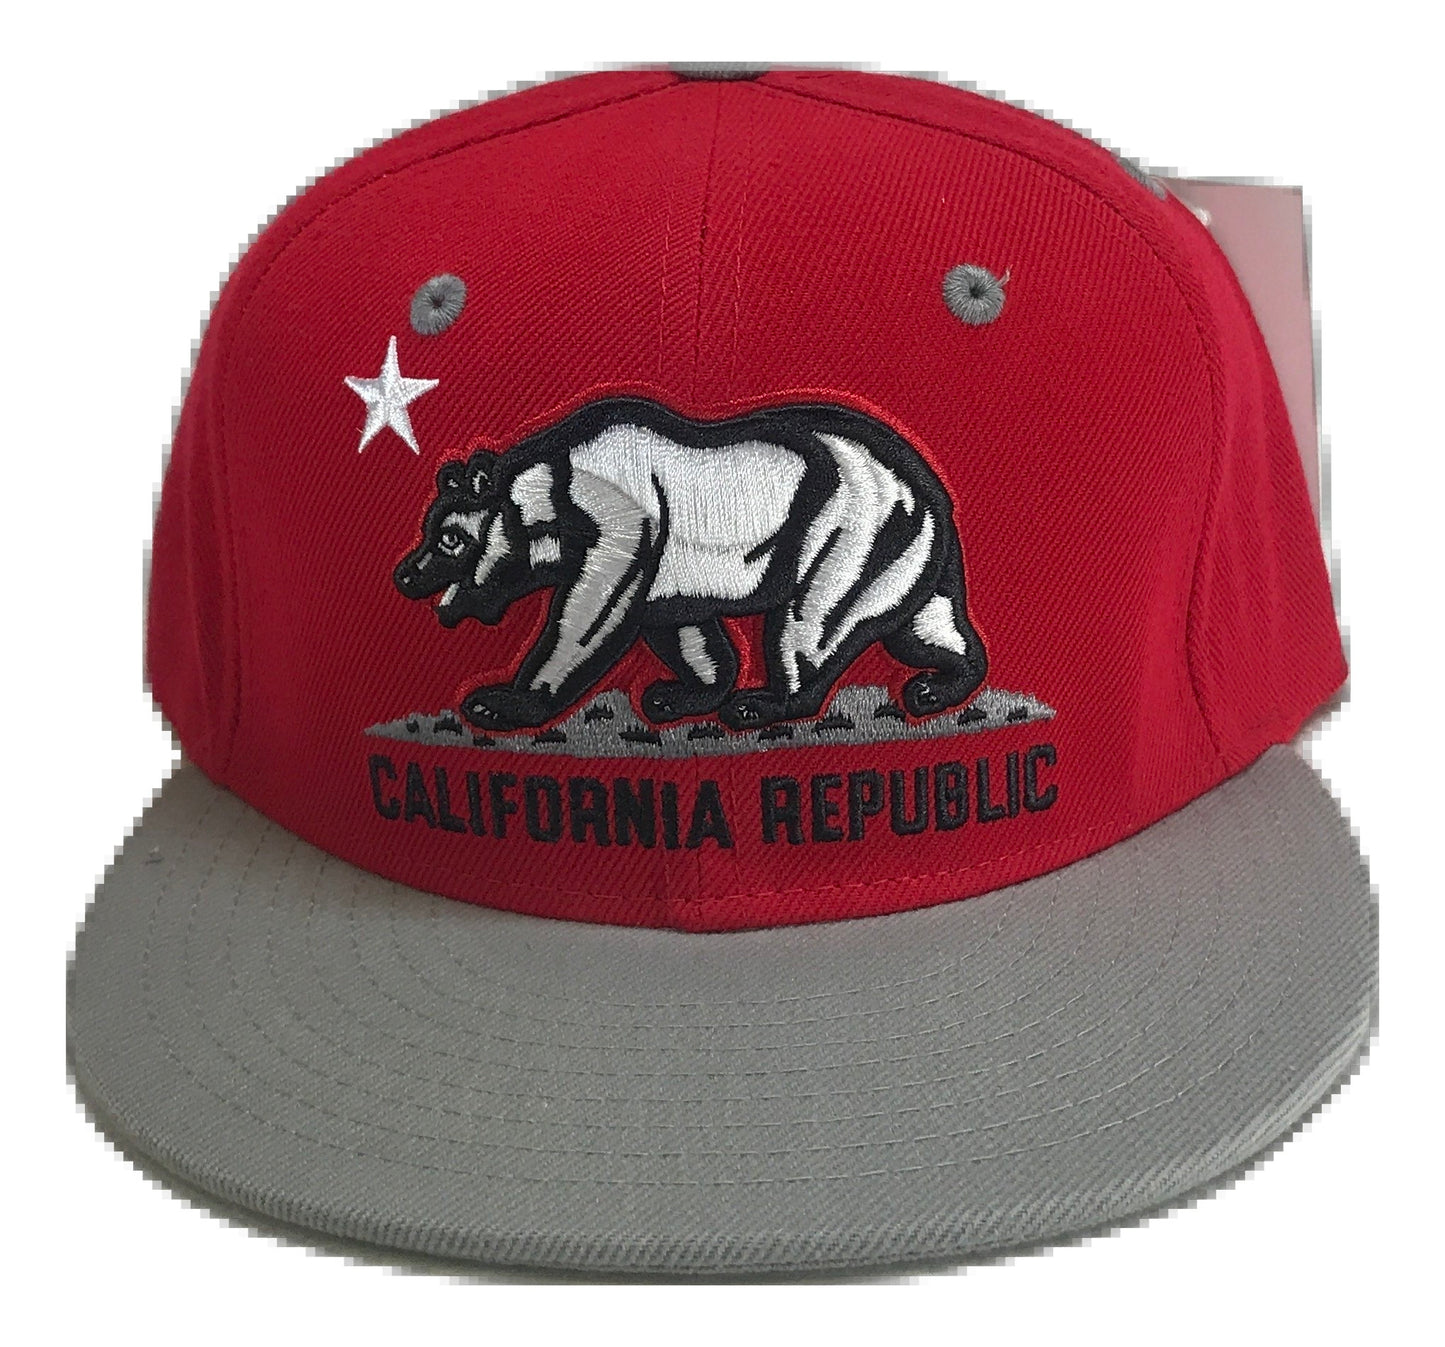 California Republic Snapback (Colors)